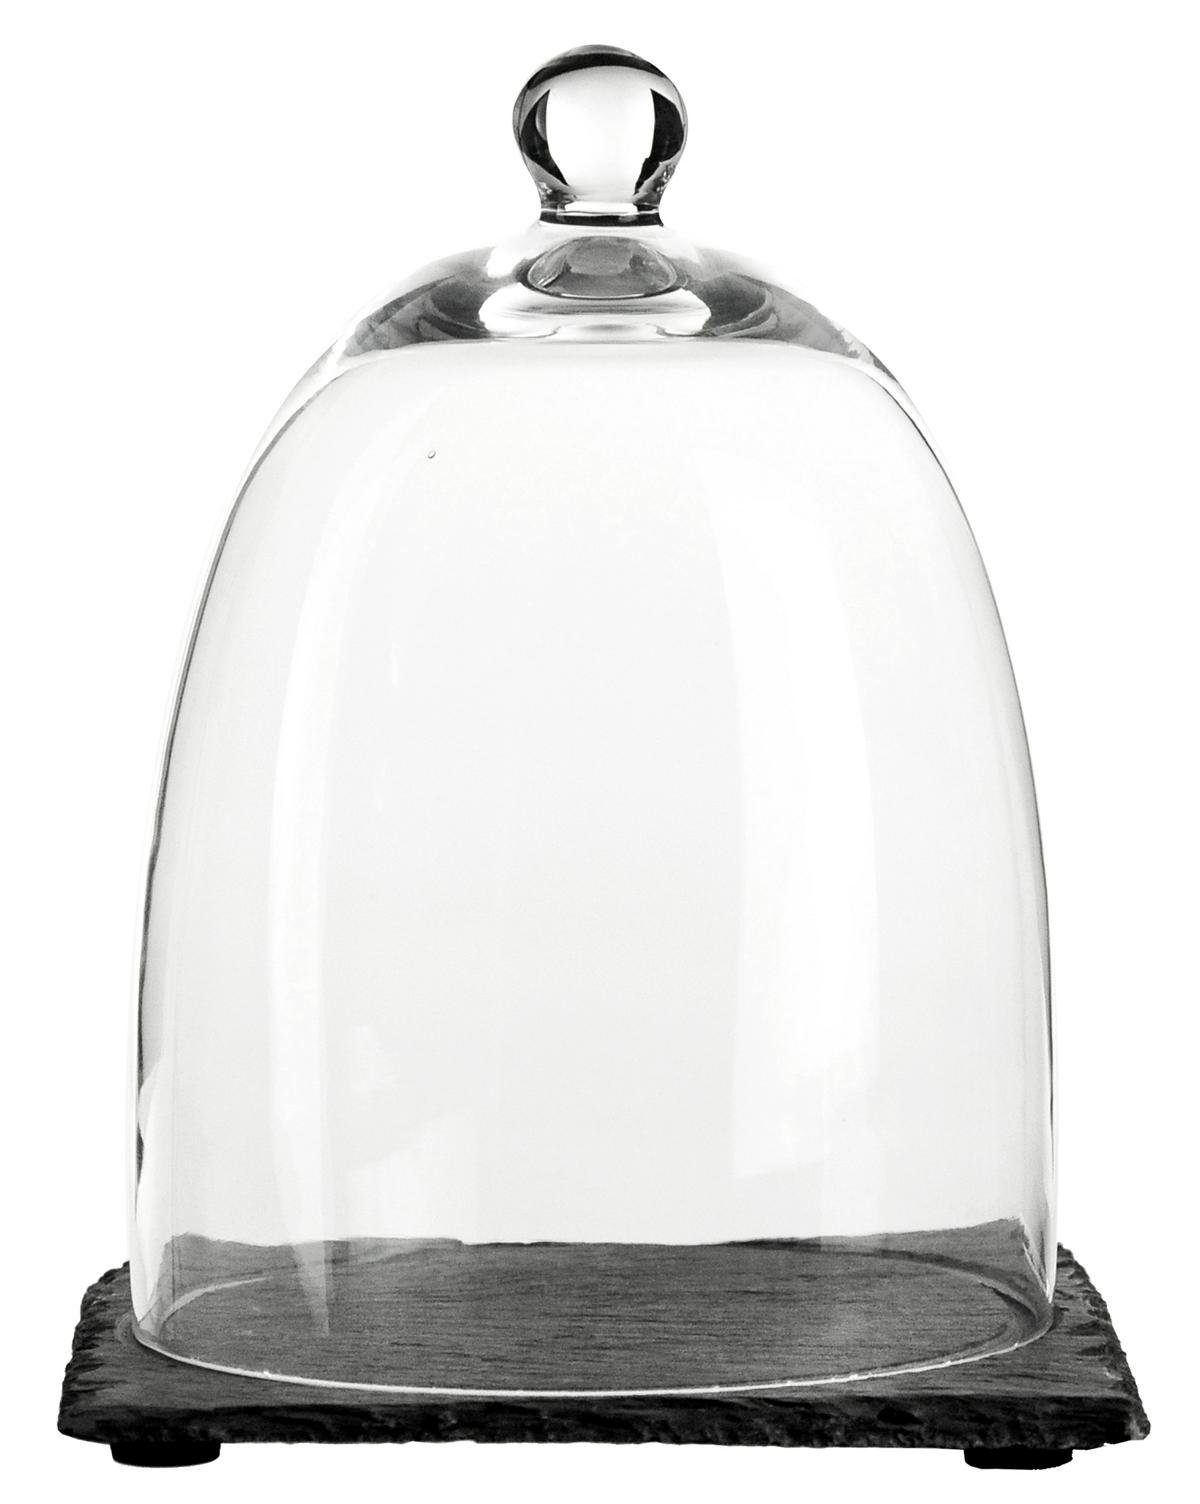 Glasdom Glashaube Glocke Haube Tortenglocke Glaskuppel Schieferplatte auf Glasglocke Sendez 15x20cm